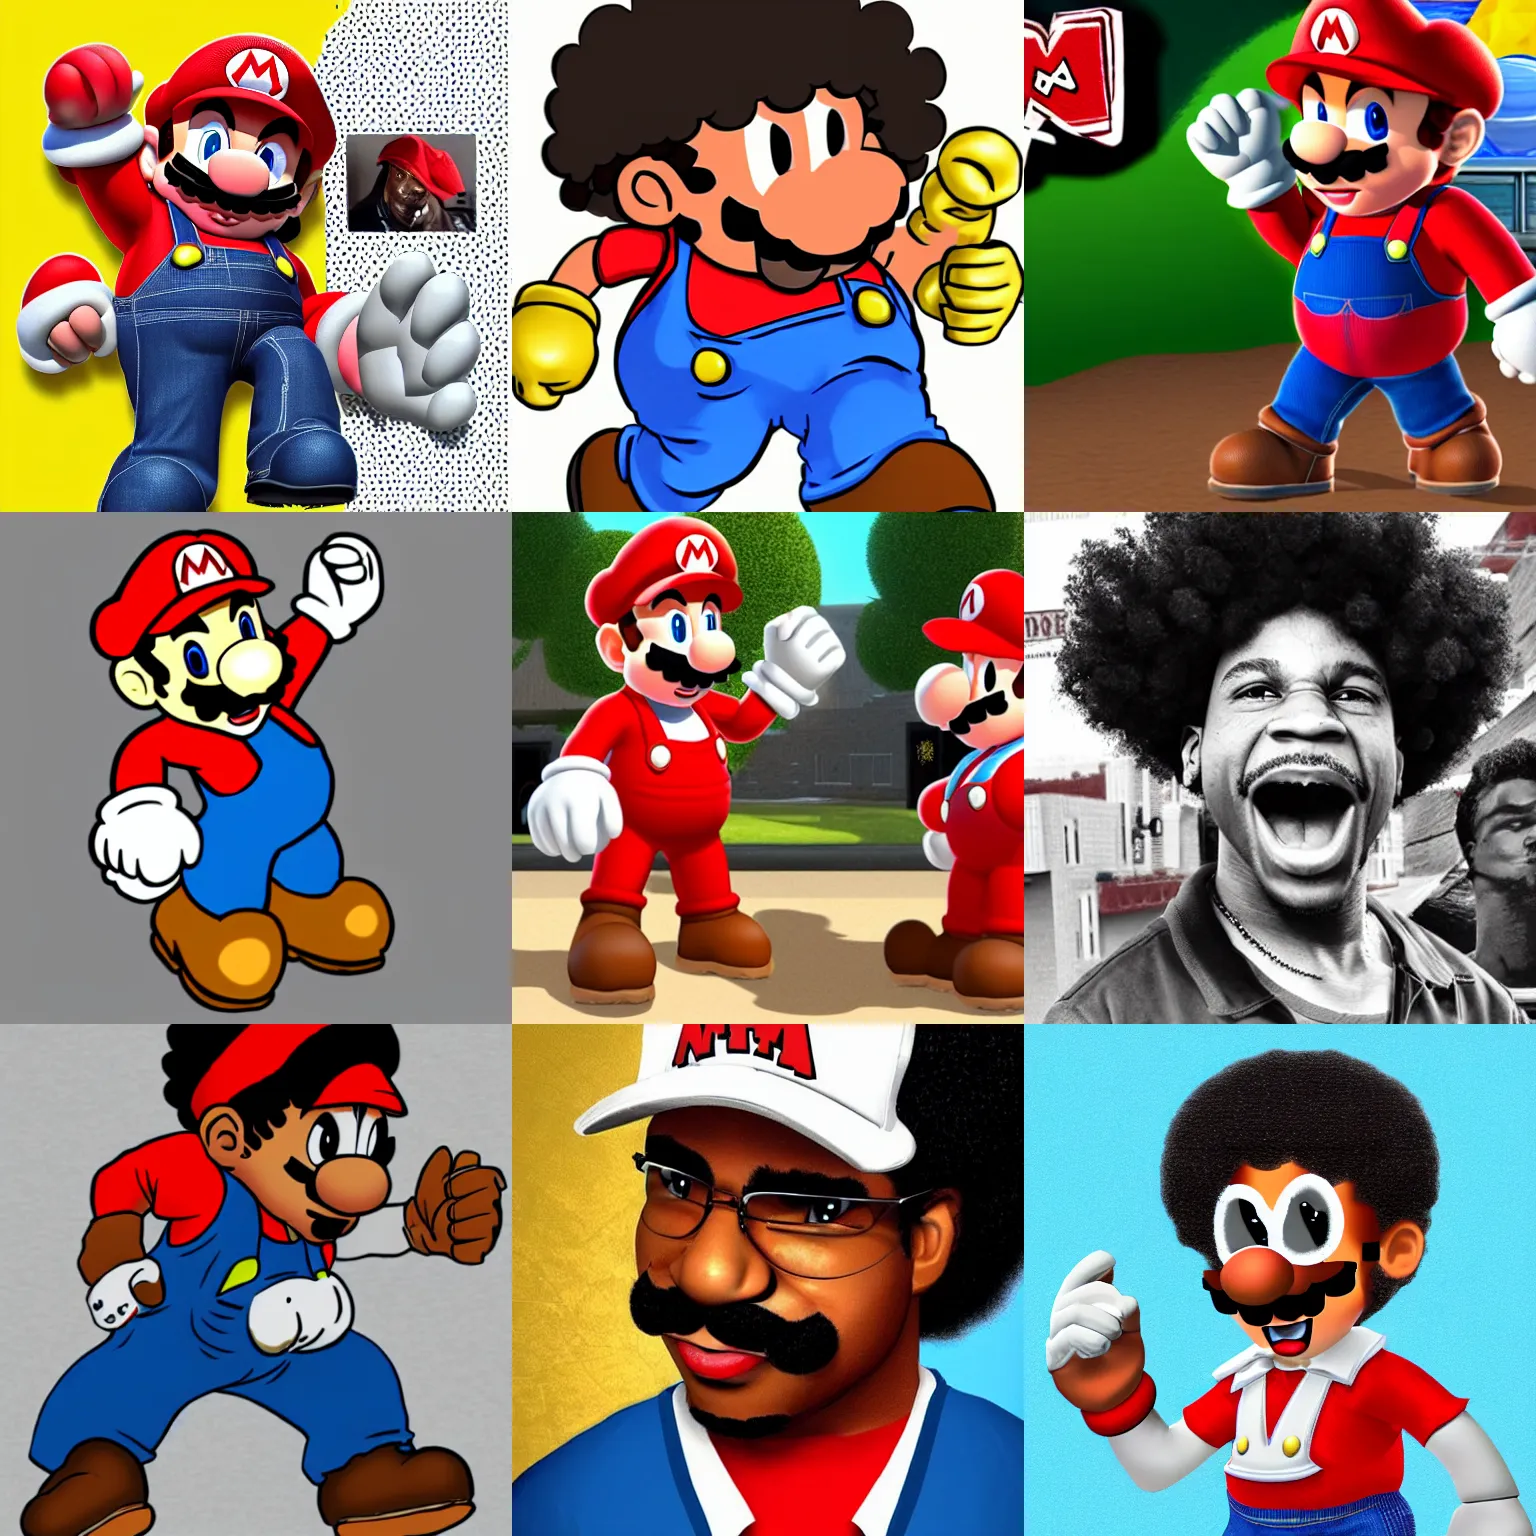 Prompt: afro-american Mario